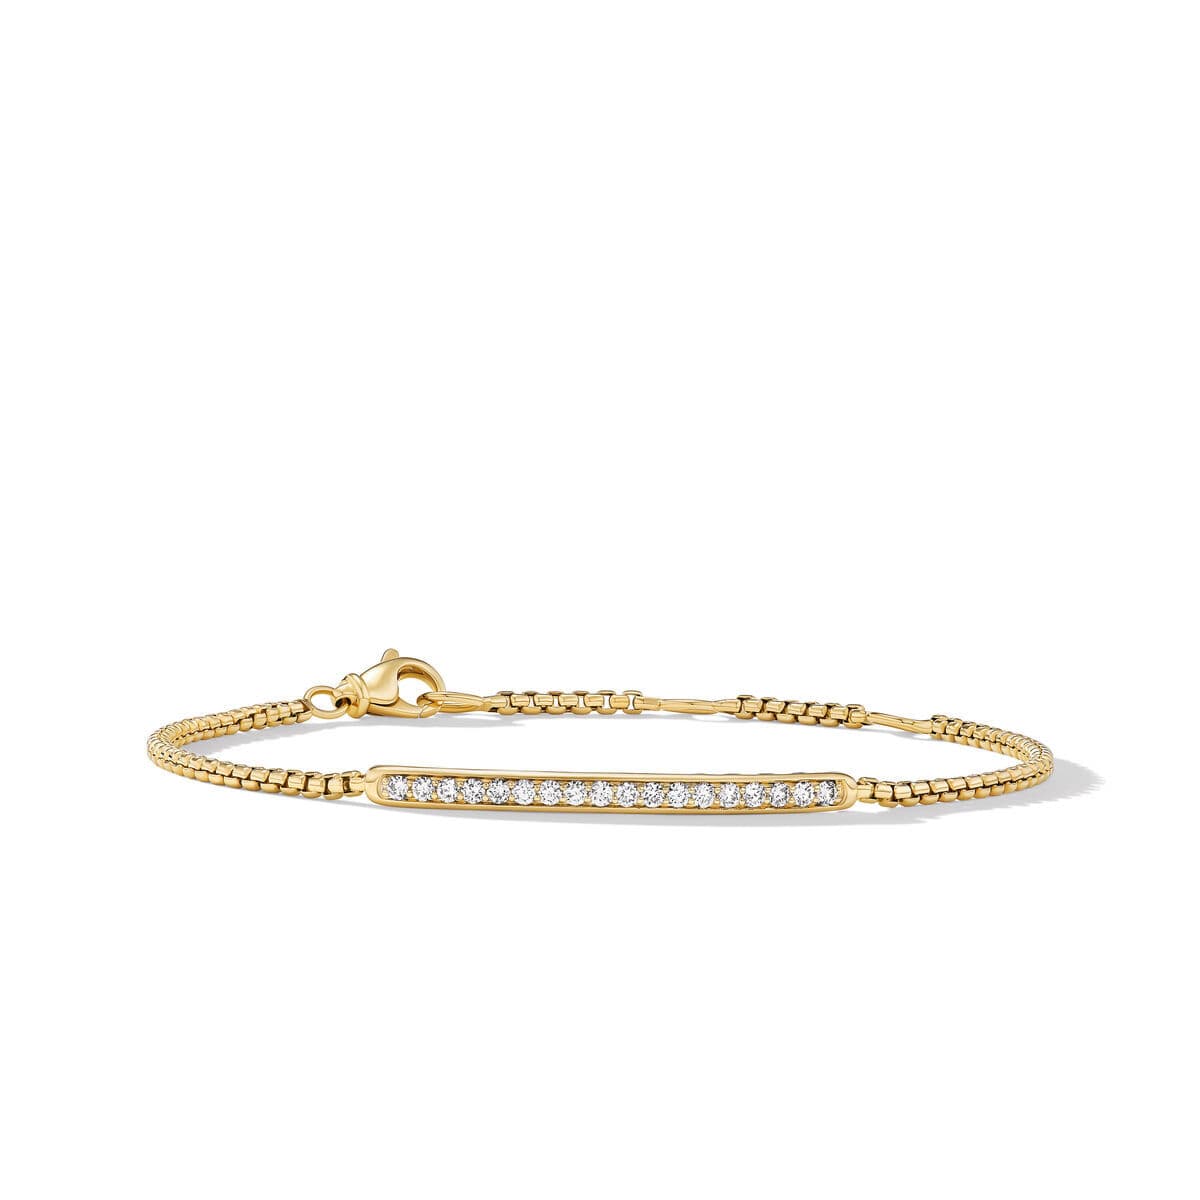 David Yurman Petite Pavé Bar Bracelet in 18K Yellow Gold with Diamonds 0